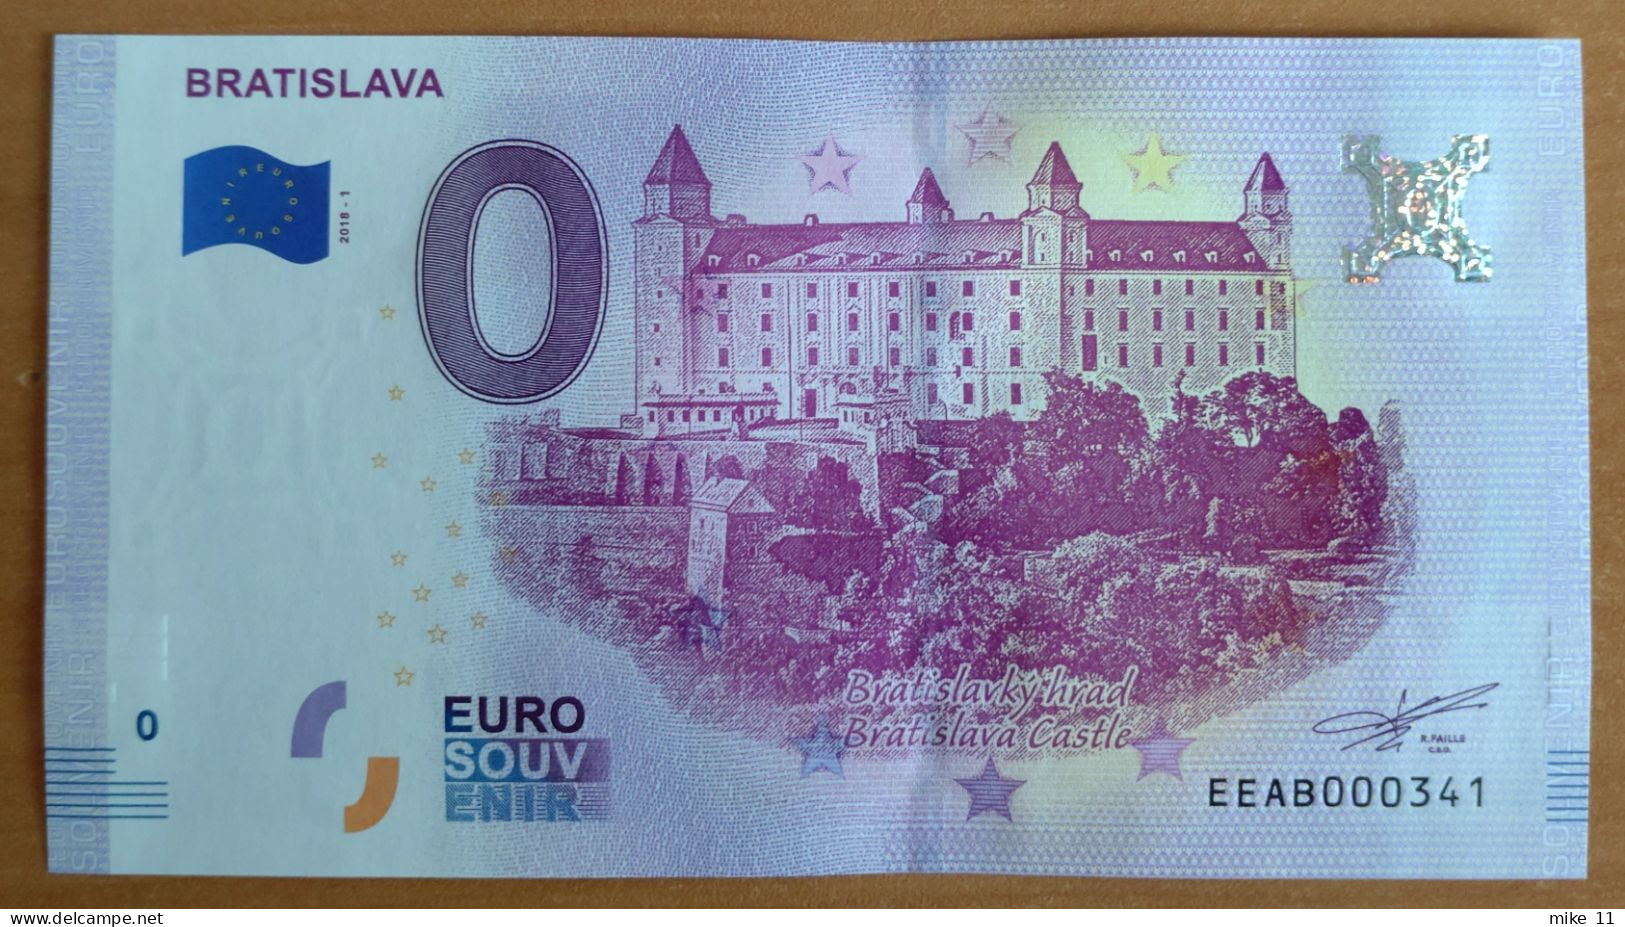 0 Euro Souvenir BRATISLAVA Slovakia EEAB 2018-1 Nr. 341 - Autres - Europe